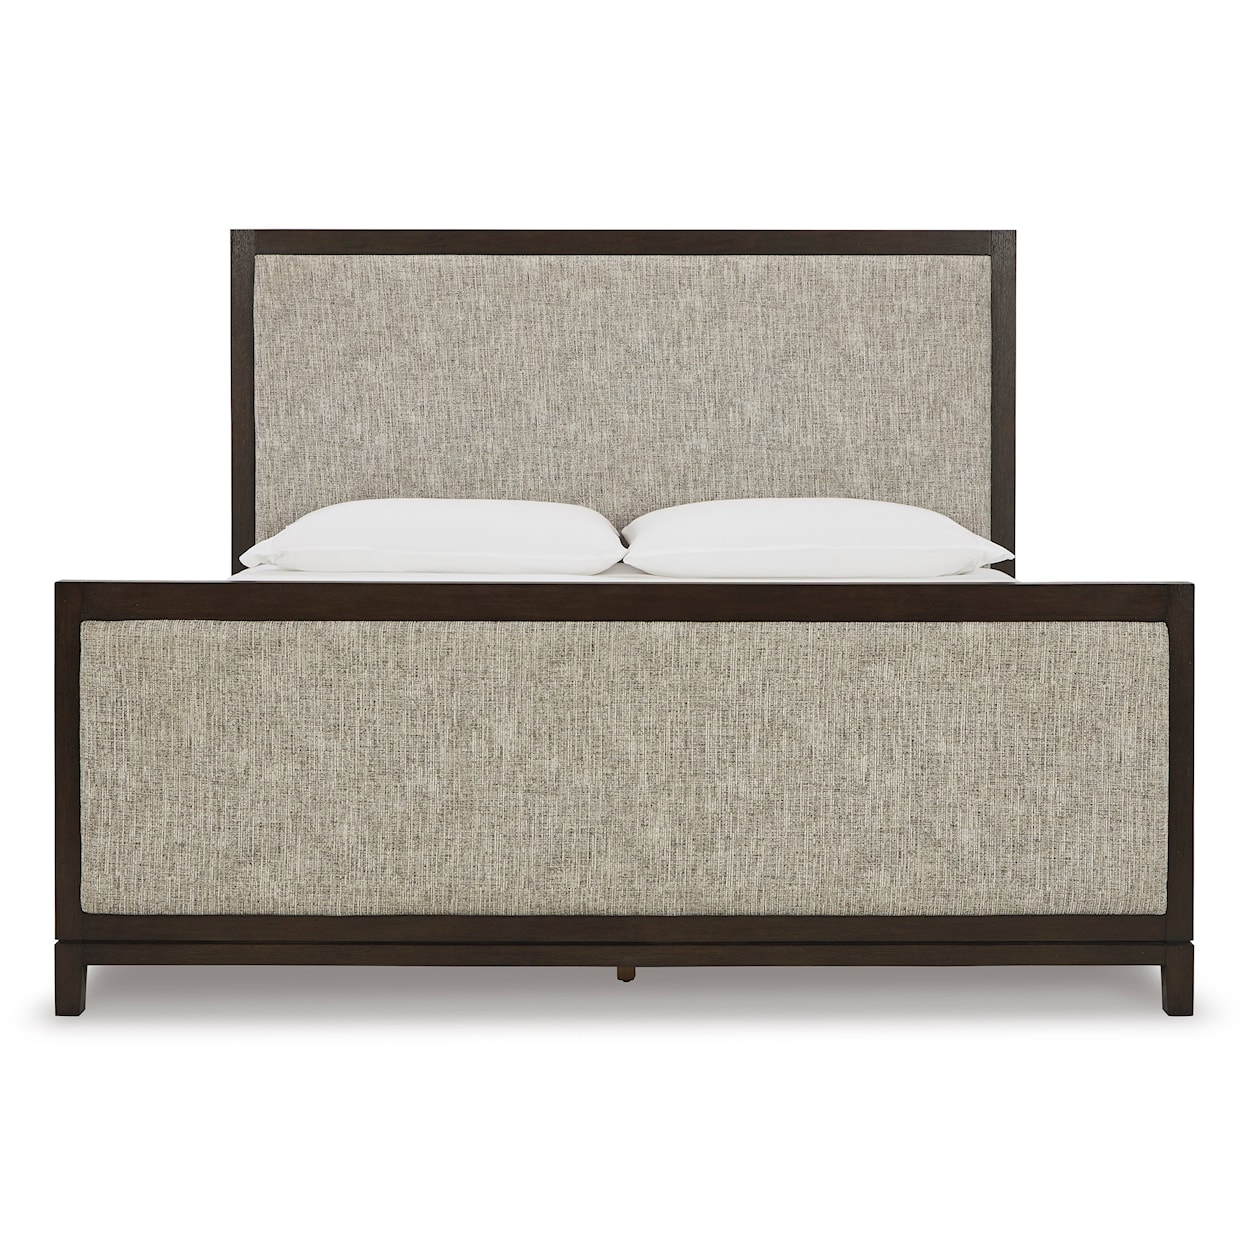 Ashley Furniture Signature Design Burkhaus California King Upholstered Bed